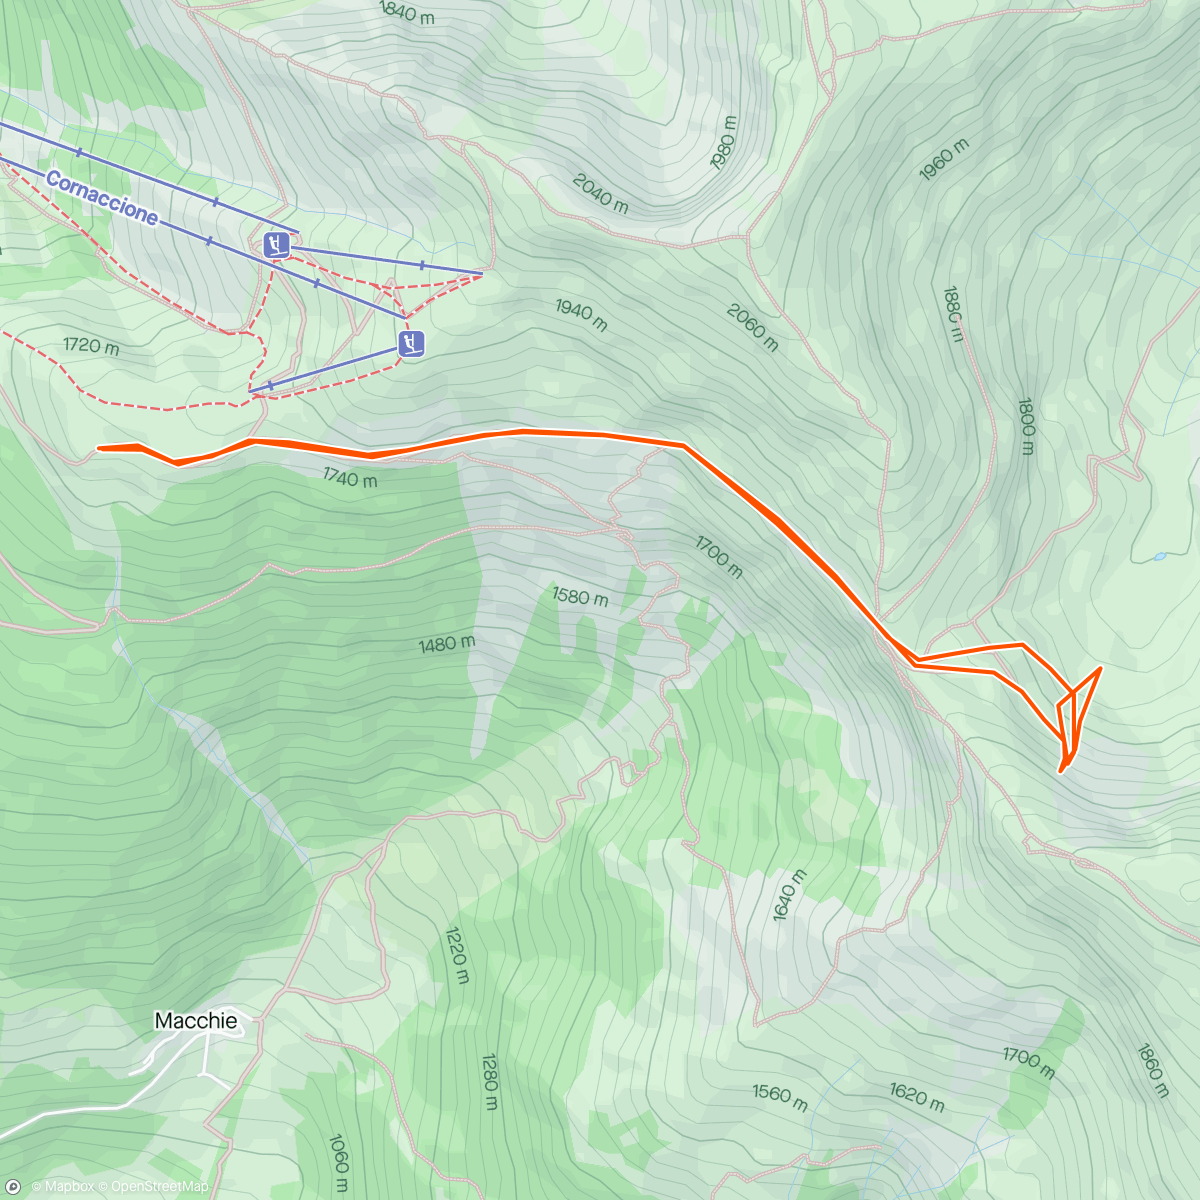 Map of the activity, Skialp Valle orteccia